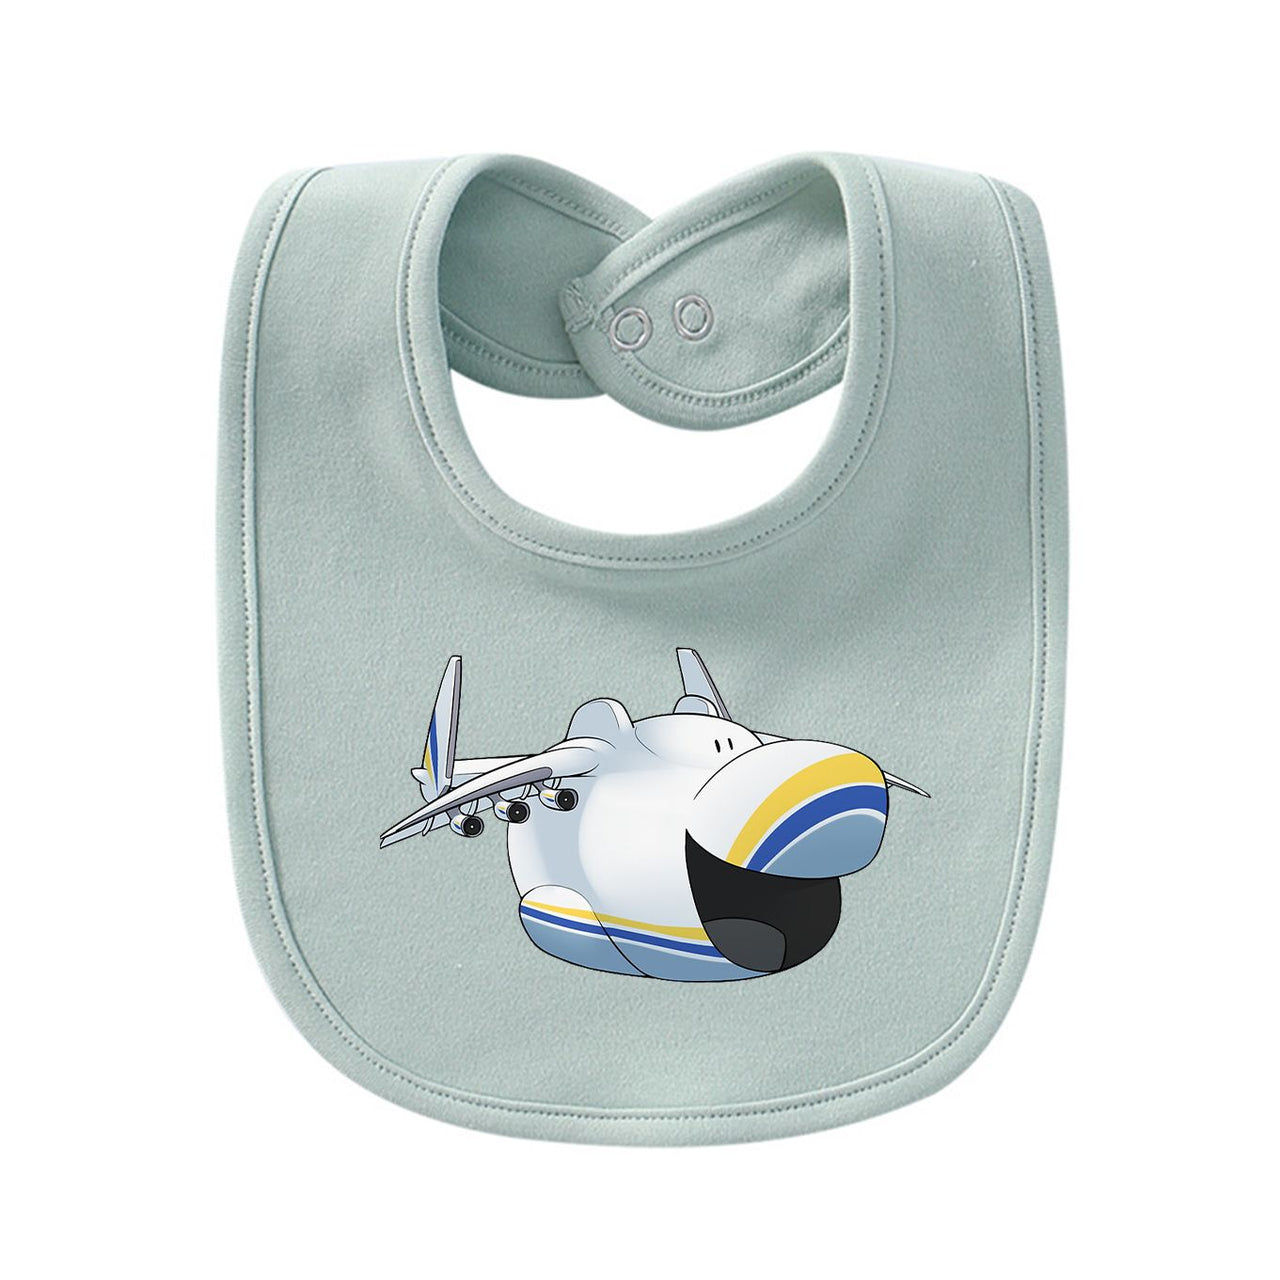 Antonov 225 Mouth Designed Baby Saliva & Feeding Towels